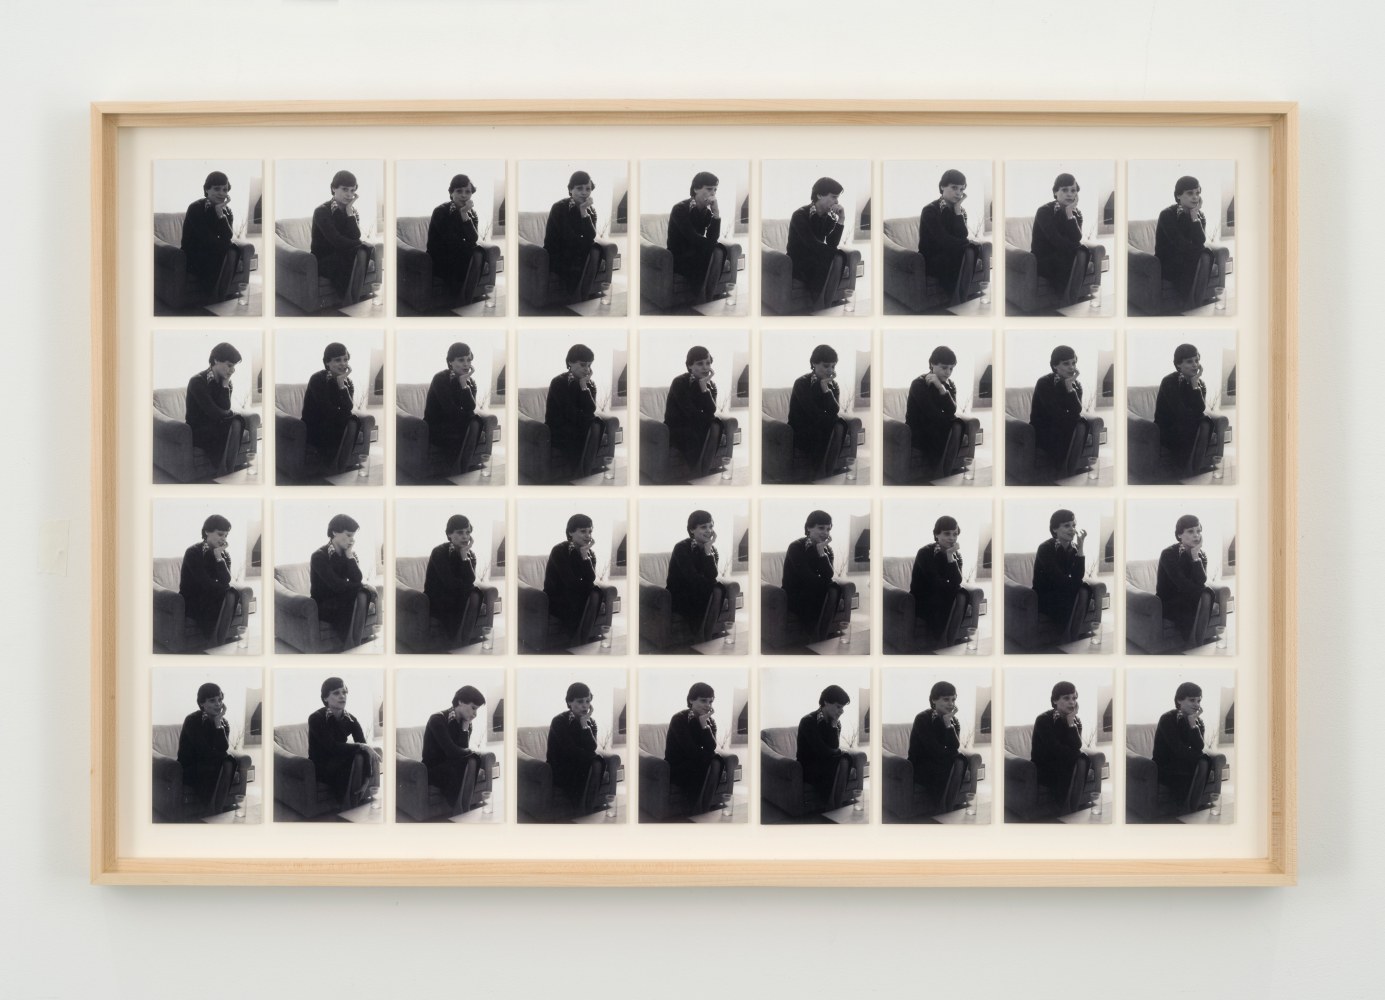 Hans-Peter Feldmann

Time Series Rosanna

36 black and white and color photographs

5 x 3 1/2 inches (12.7 x 8.9 cm) each

24 3/4 x 38 inches (62.9 x 96.5 cm) framed

HPF 074

&amp;nbsp;

INQUIRE